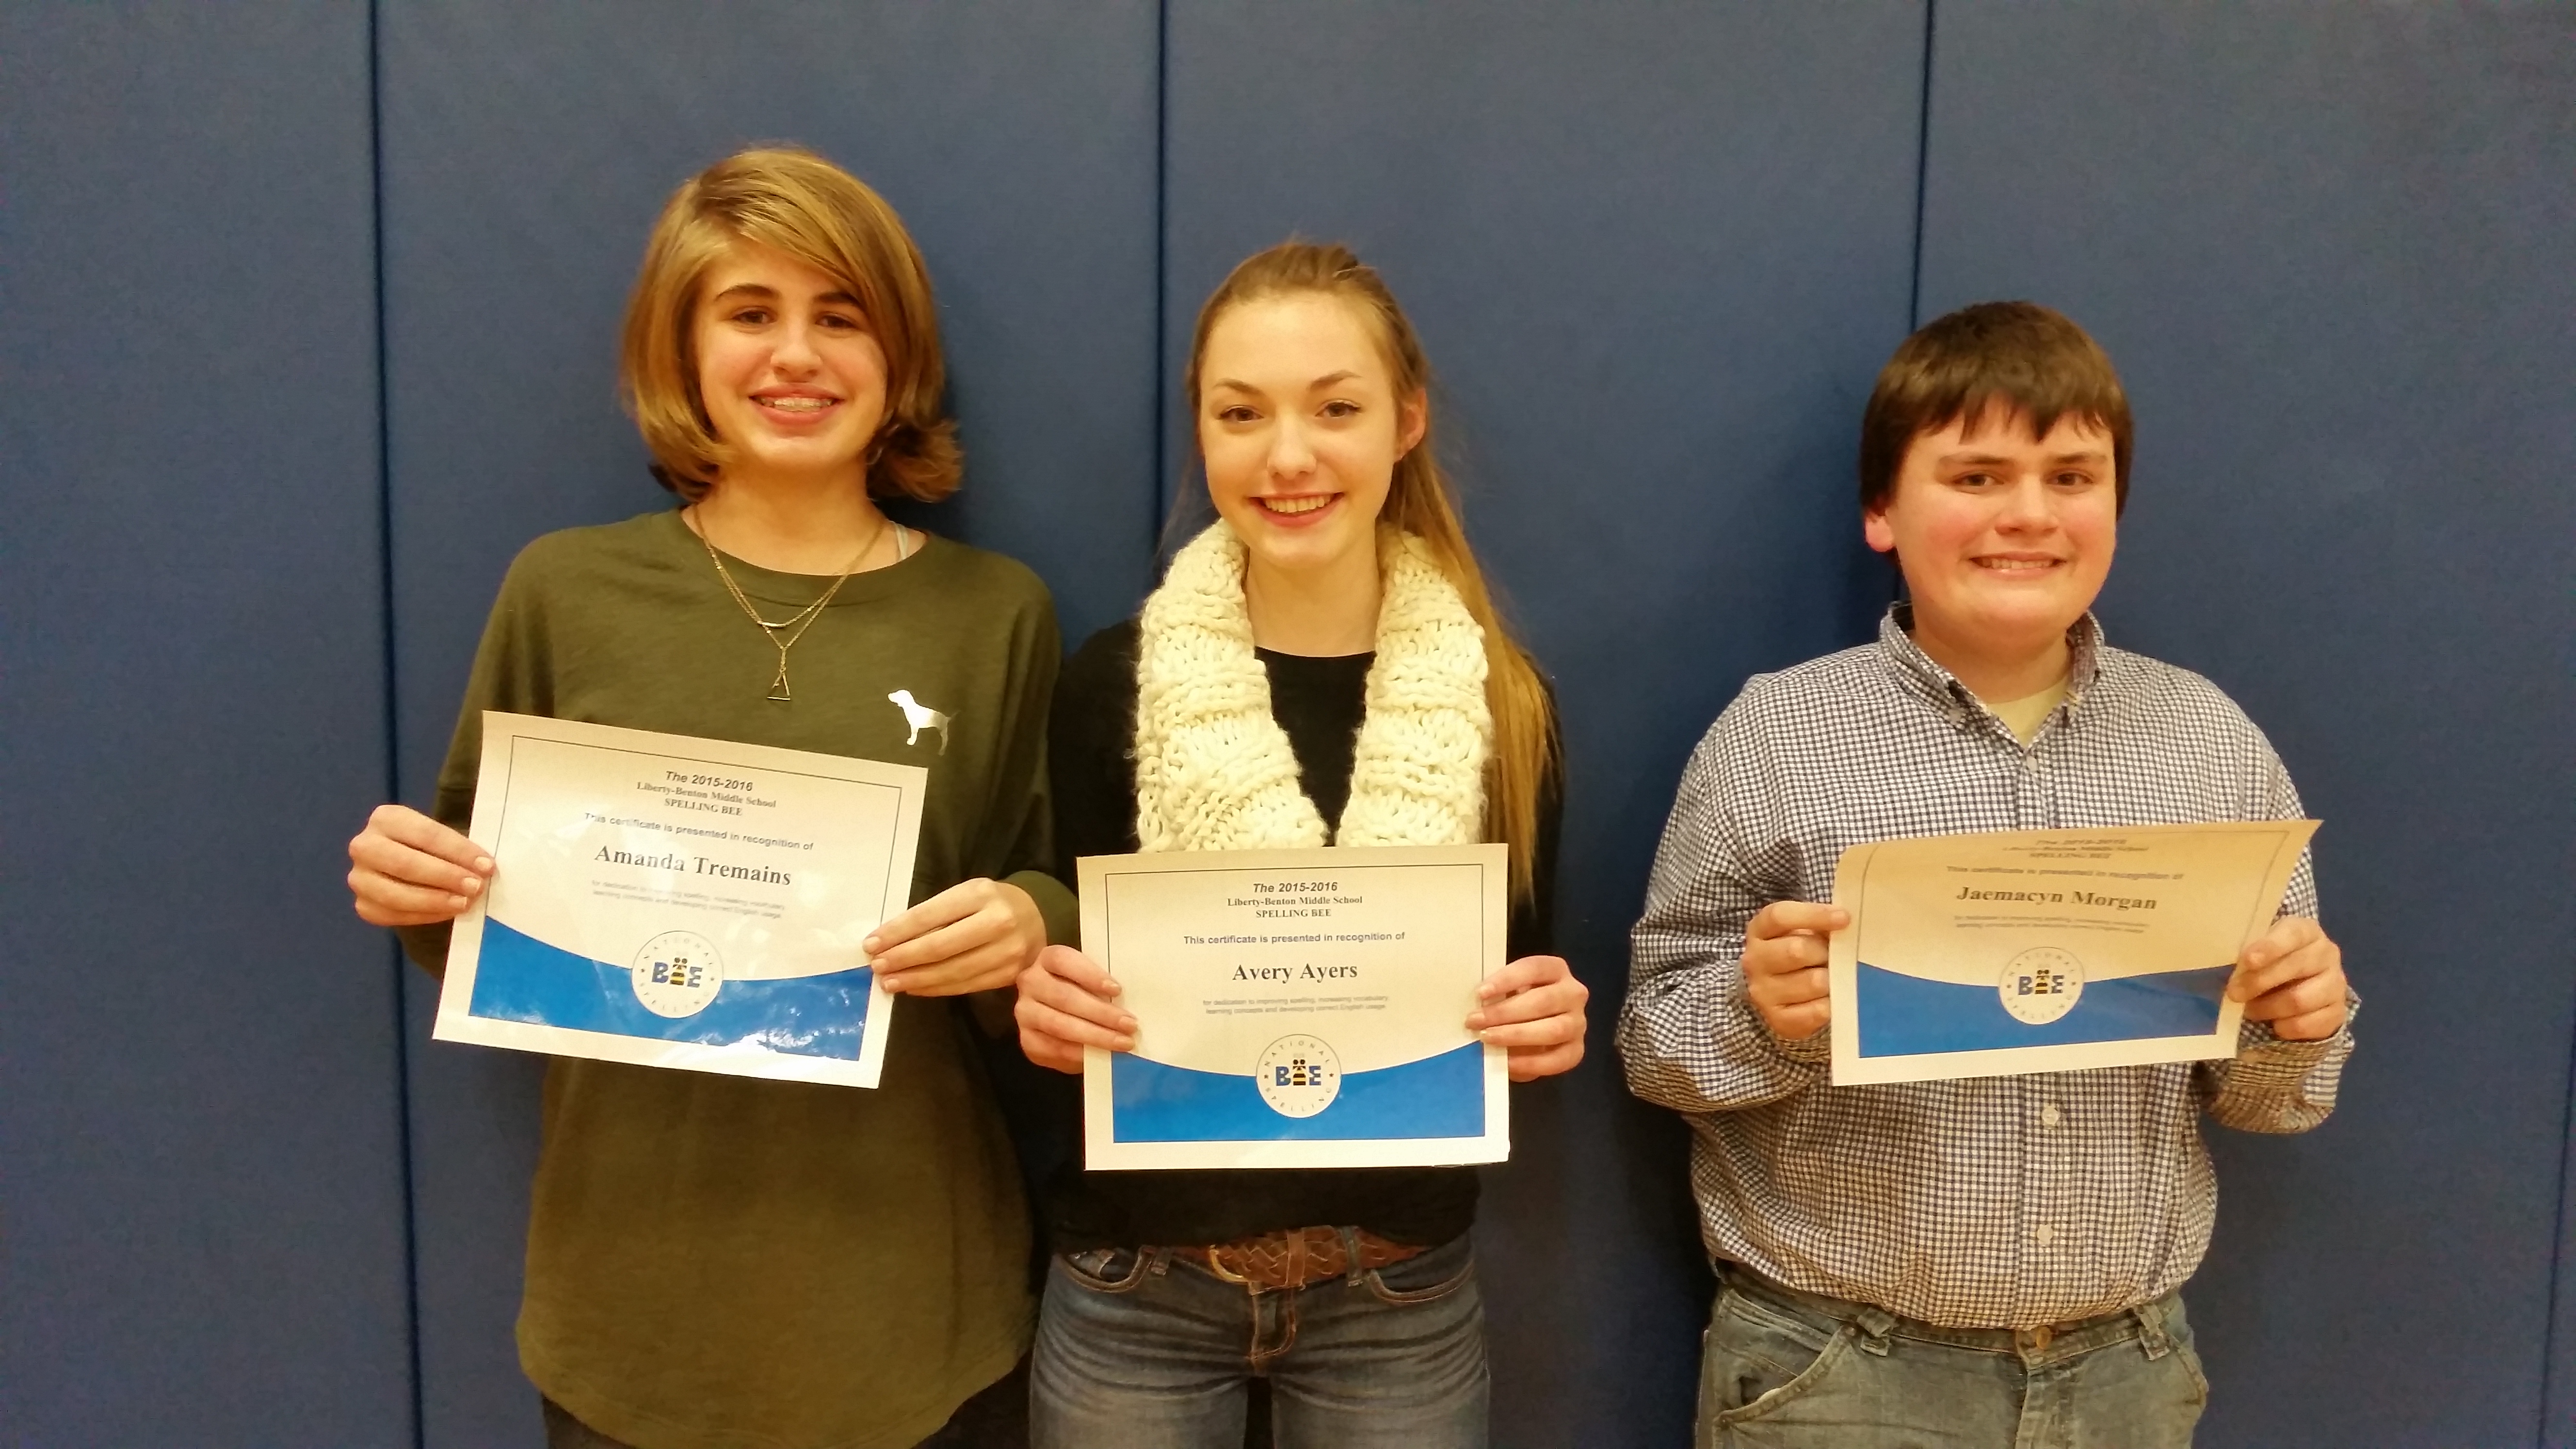 2016 Middle School Spelling Bee Finalists Amanda Tremains, Avery Ayers, Jaemacyn Morgan